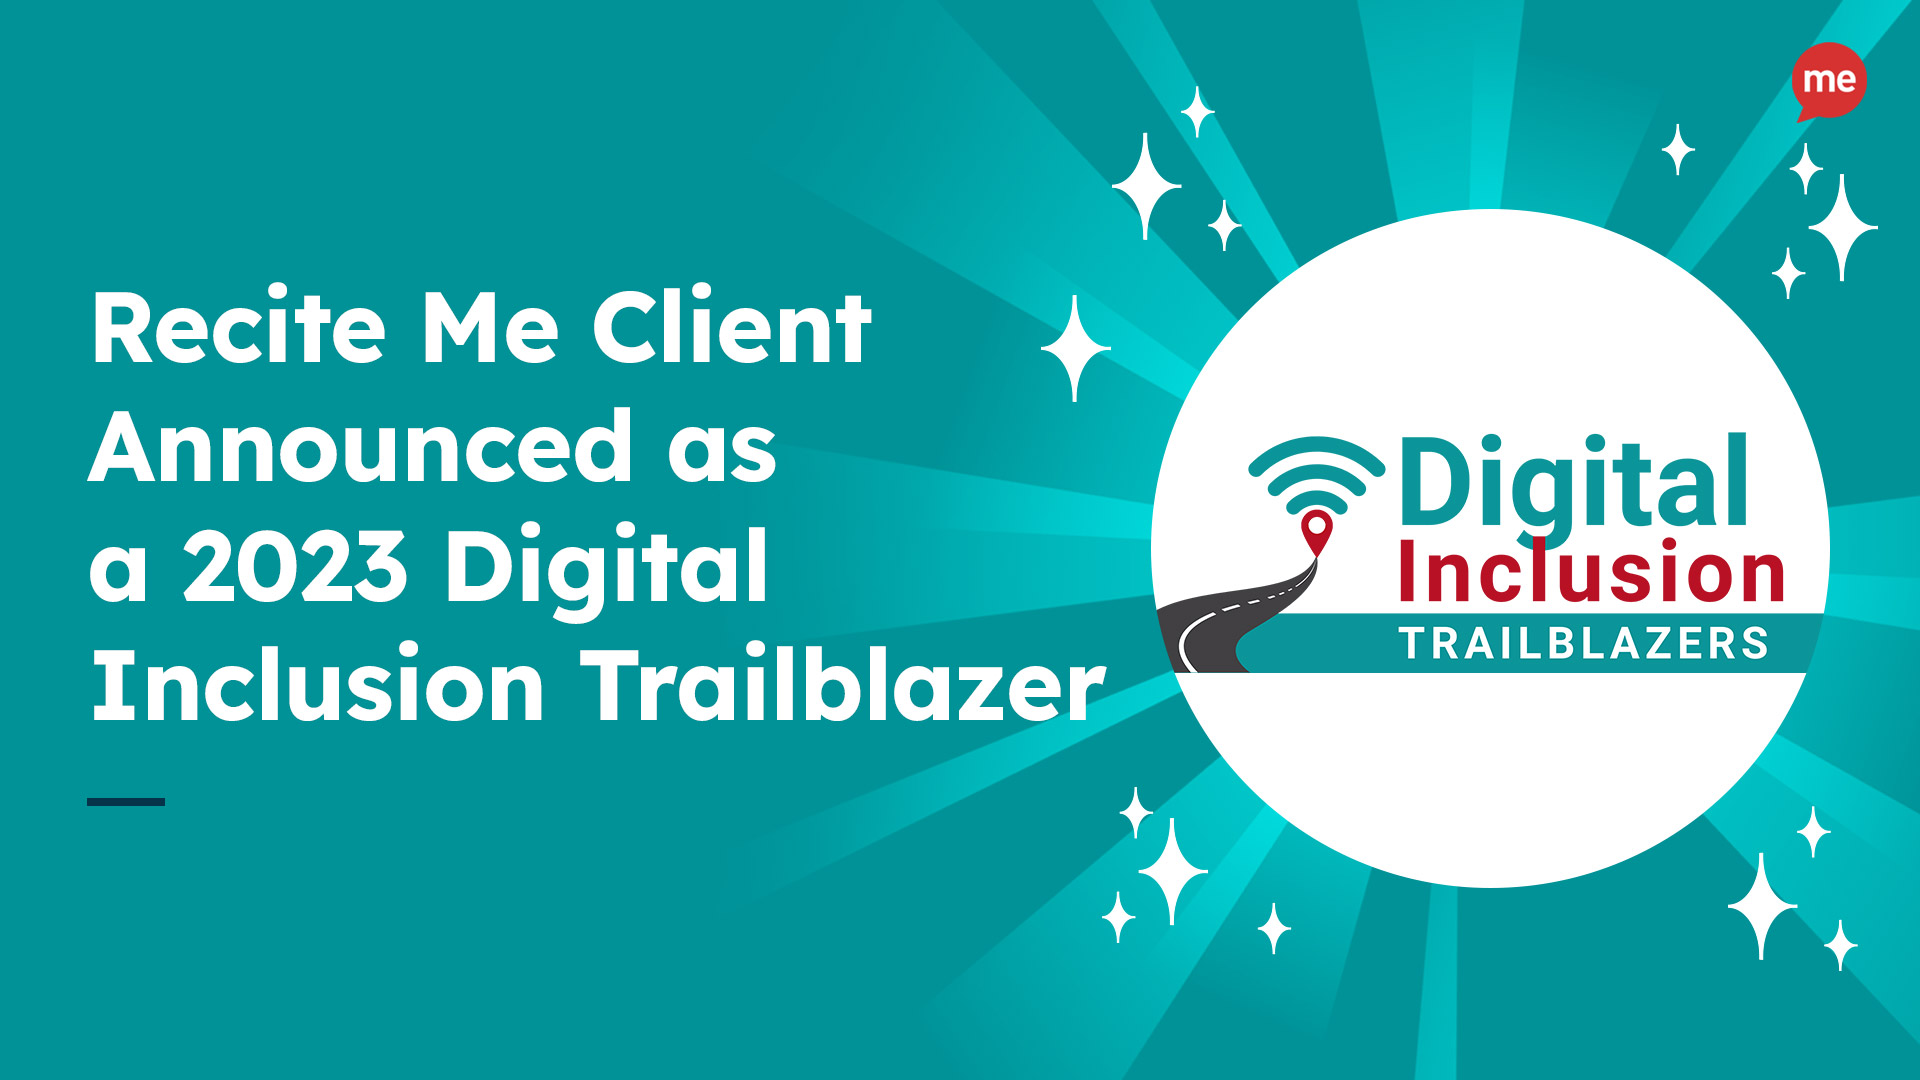 Recite Me Client Announced on a 2023 Digital Inclusion Trailblazer with a logo of the Digital Inclusion Trailblazer award program